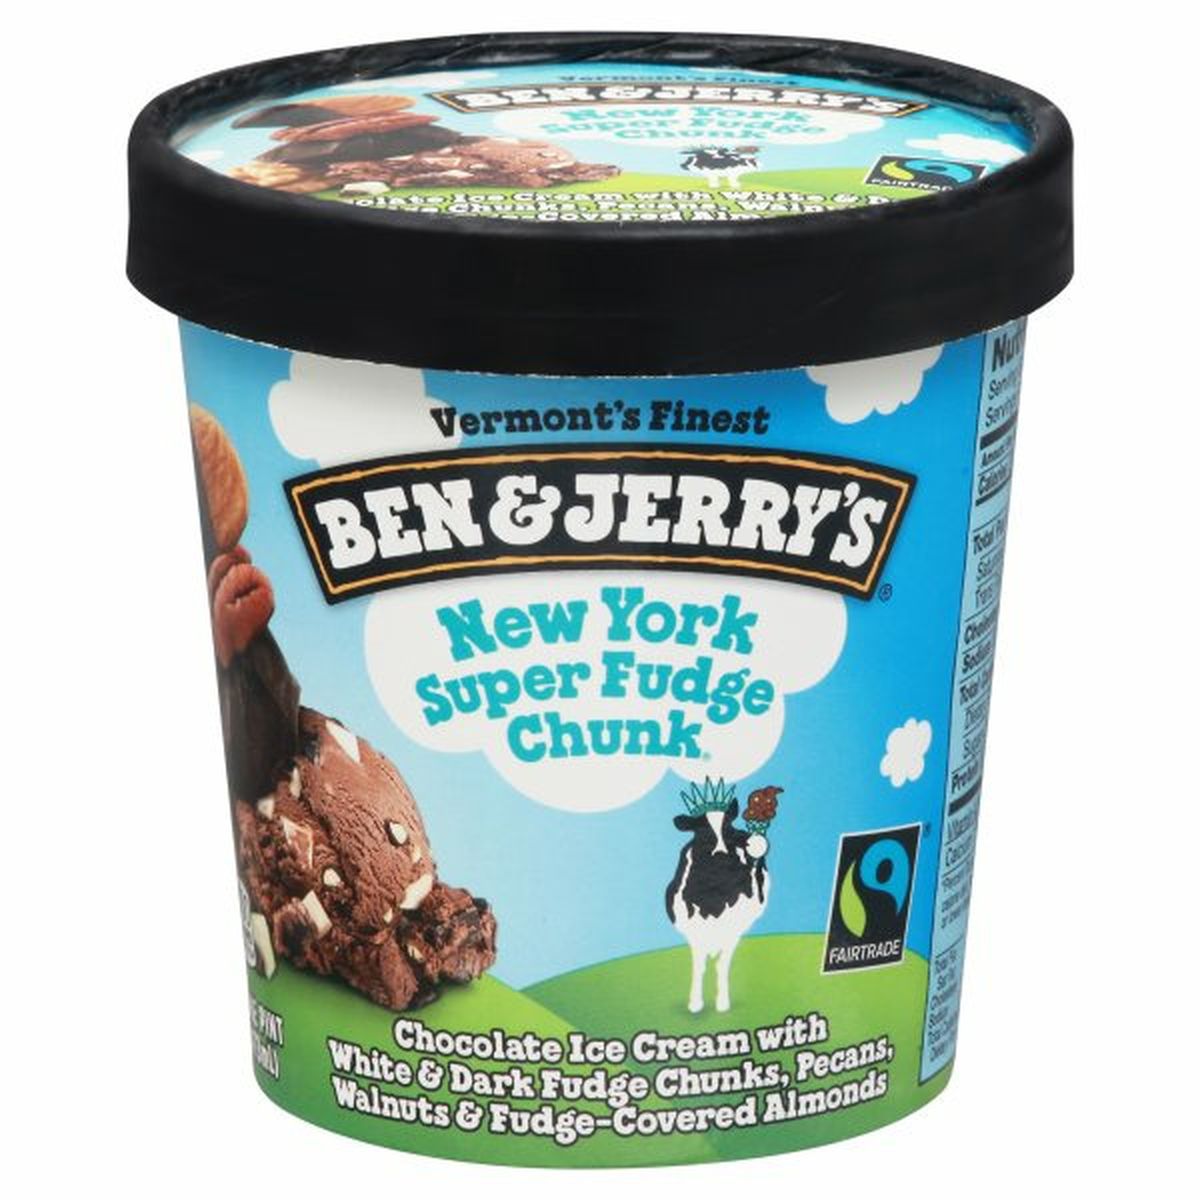 Calories in Ben & Jerry's Ice Cream, New York Super Fudge Chunk